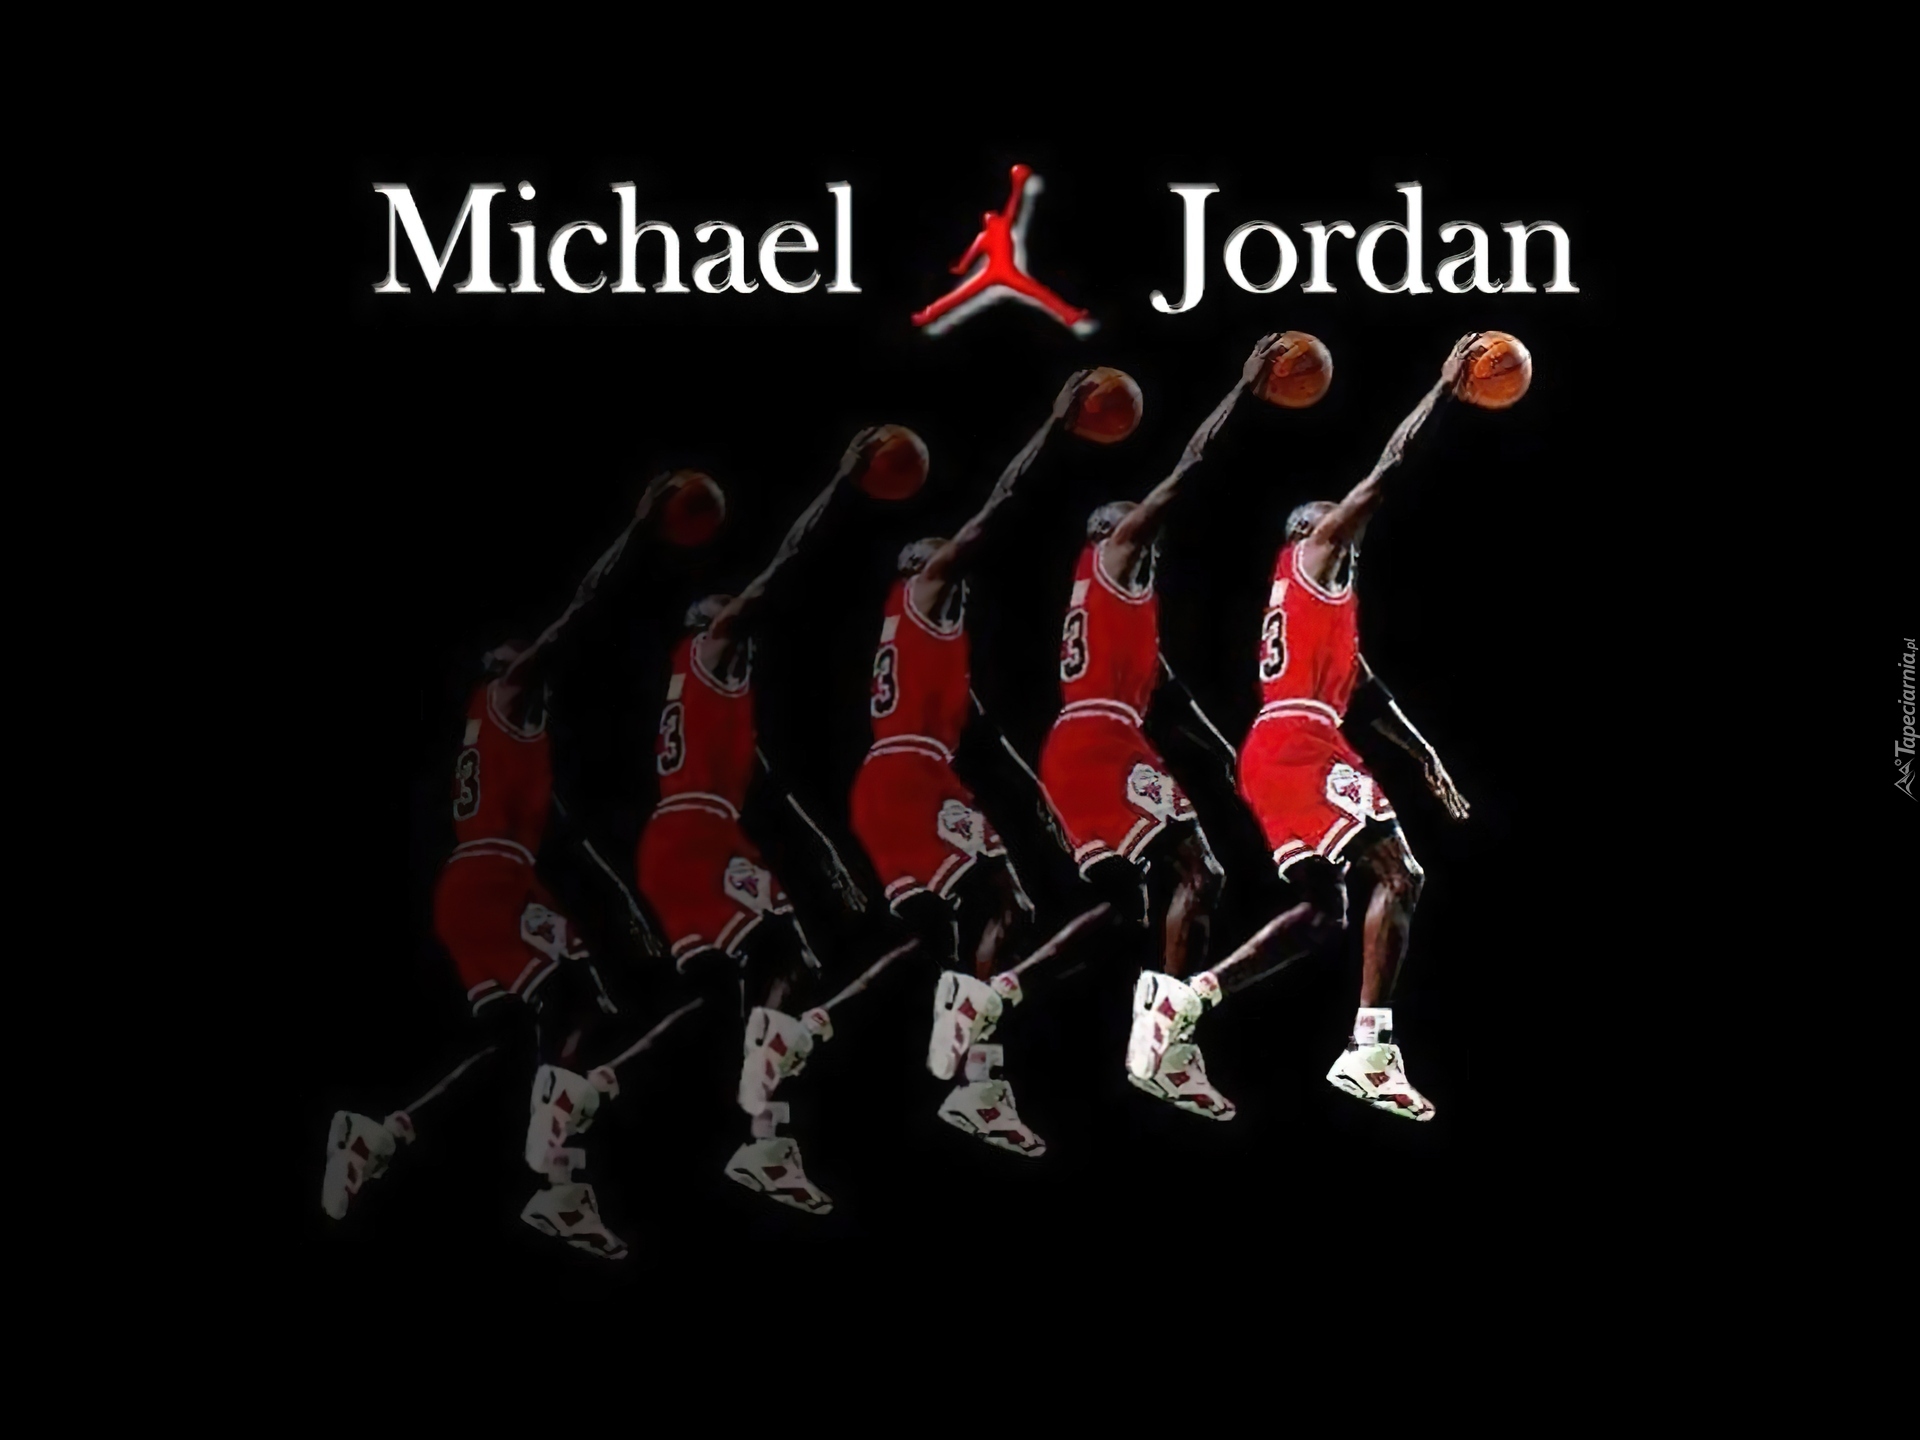 Koszykówka,koszykarz,Michael Jordan , piłka